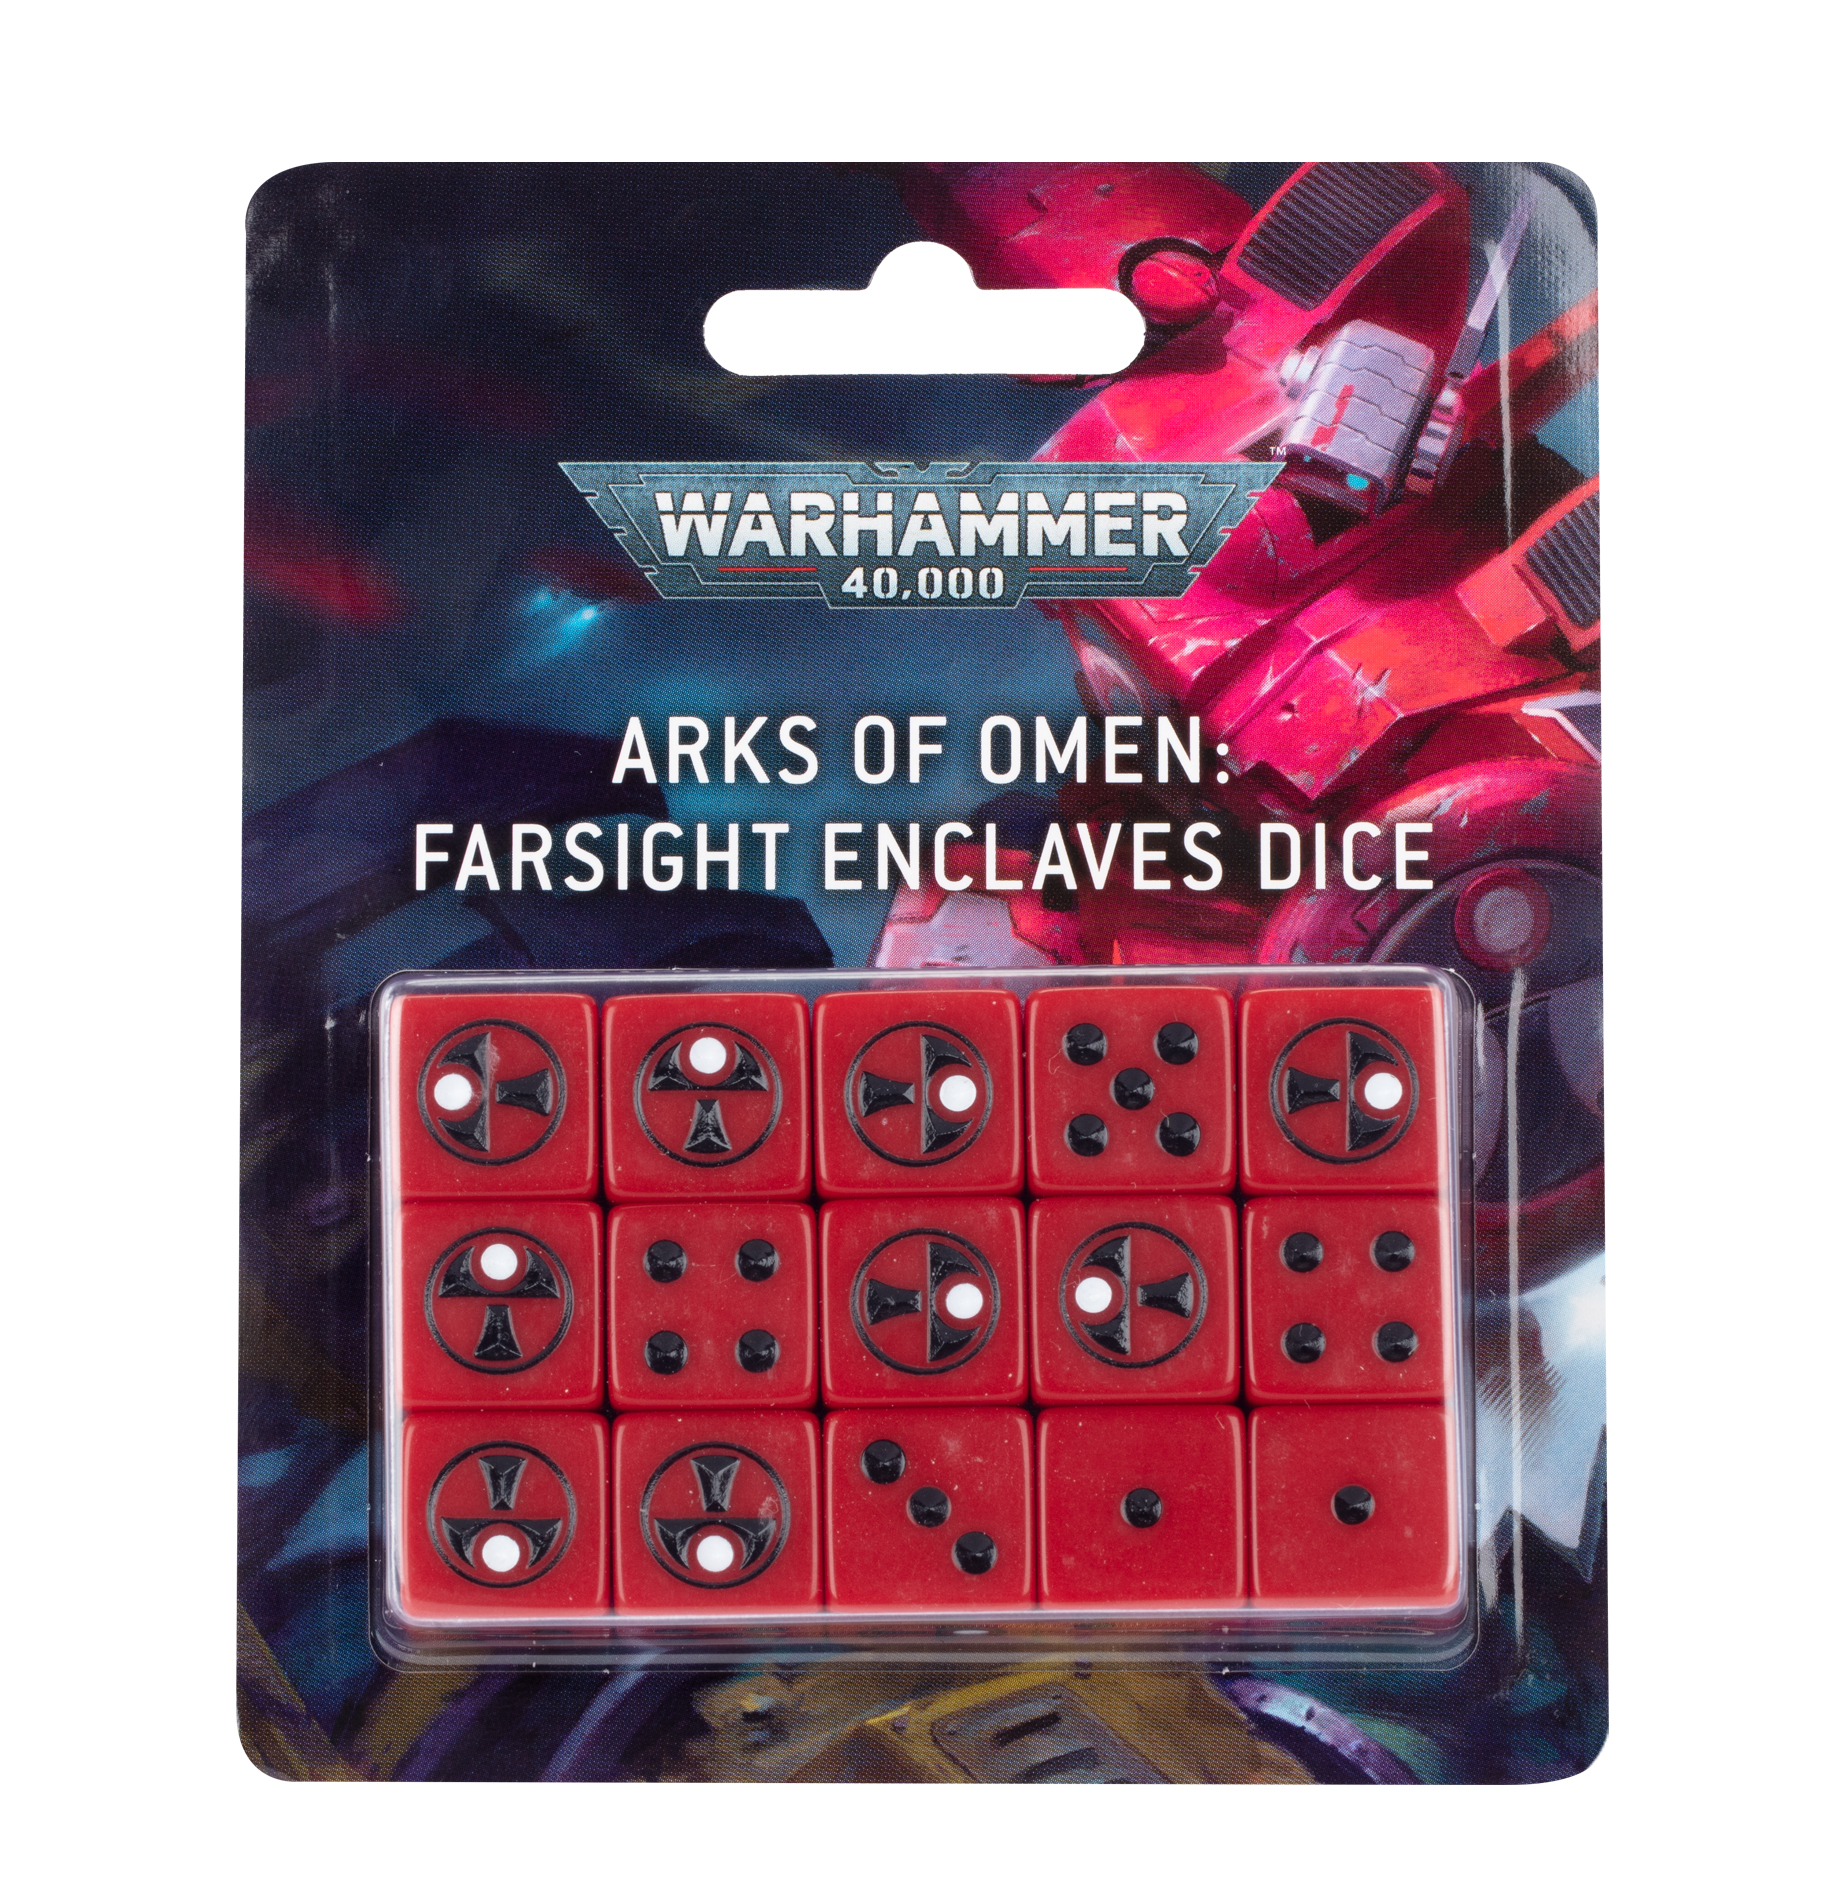 Warhammer 40,000: Arks of Omen: Farsight Enclaves Dice (Apr 1st) 